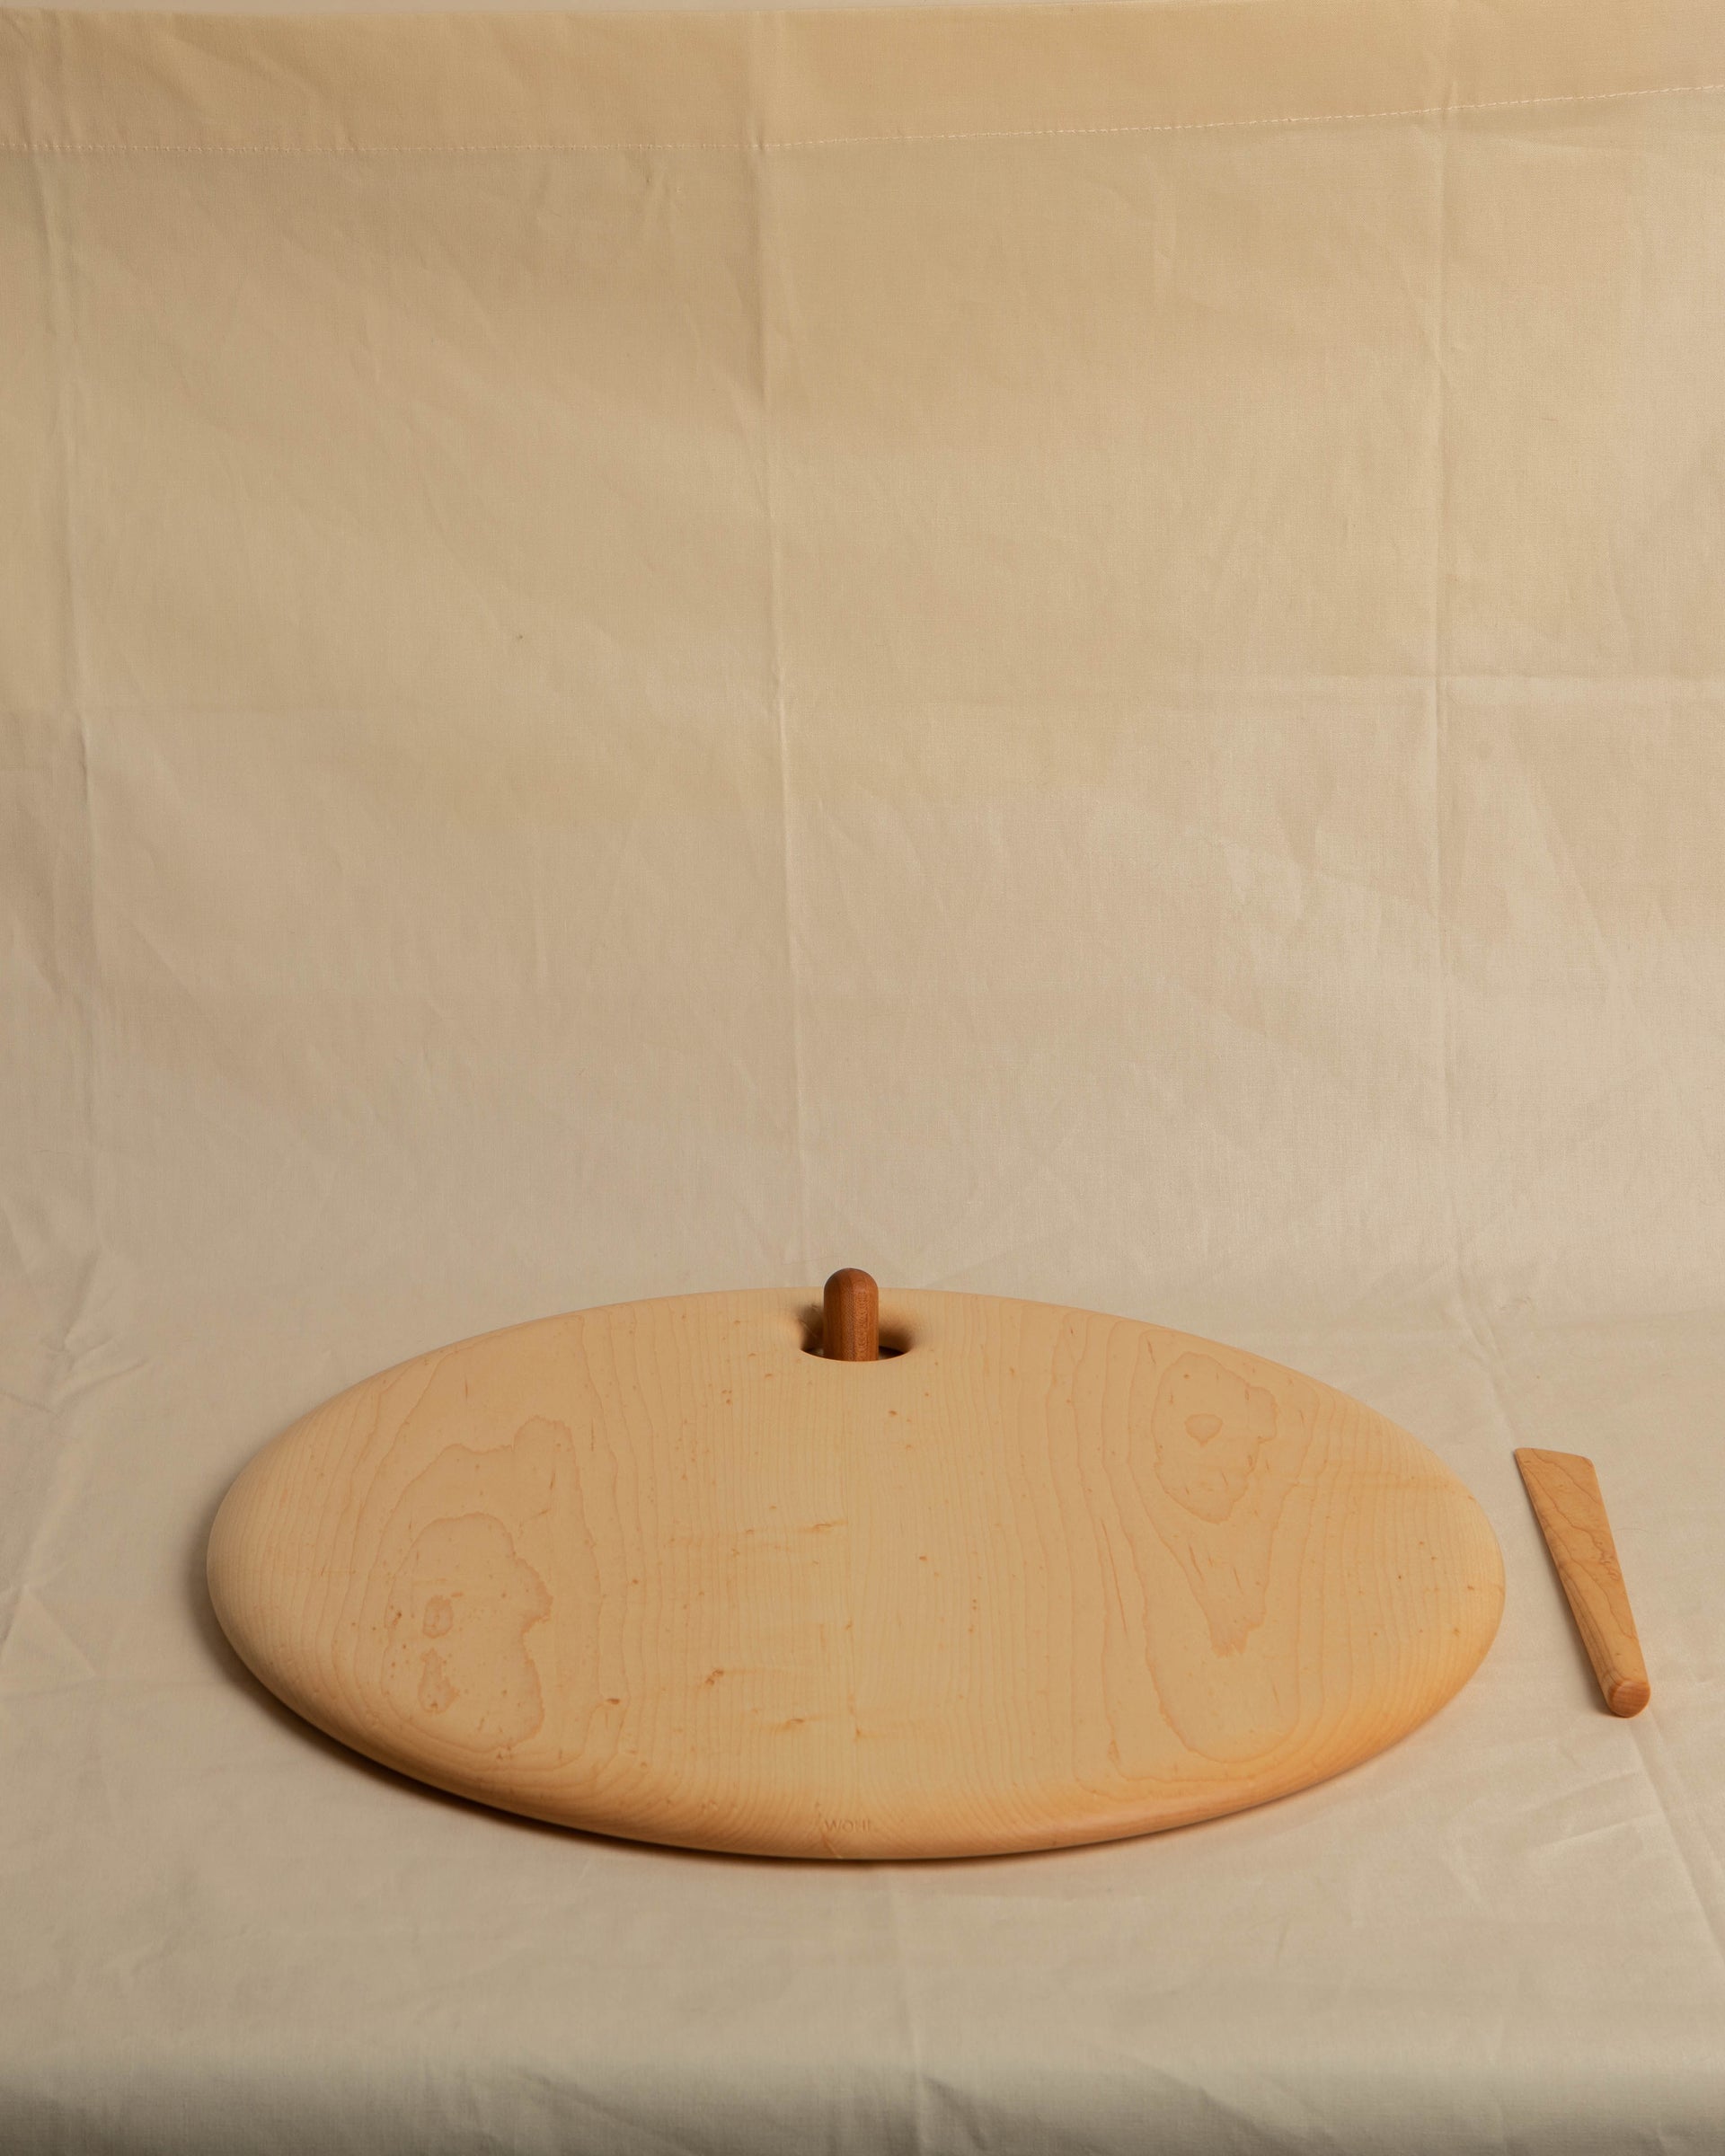 Cutting Board, Large Round #7 by Edward Wohl